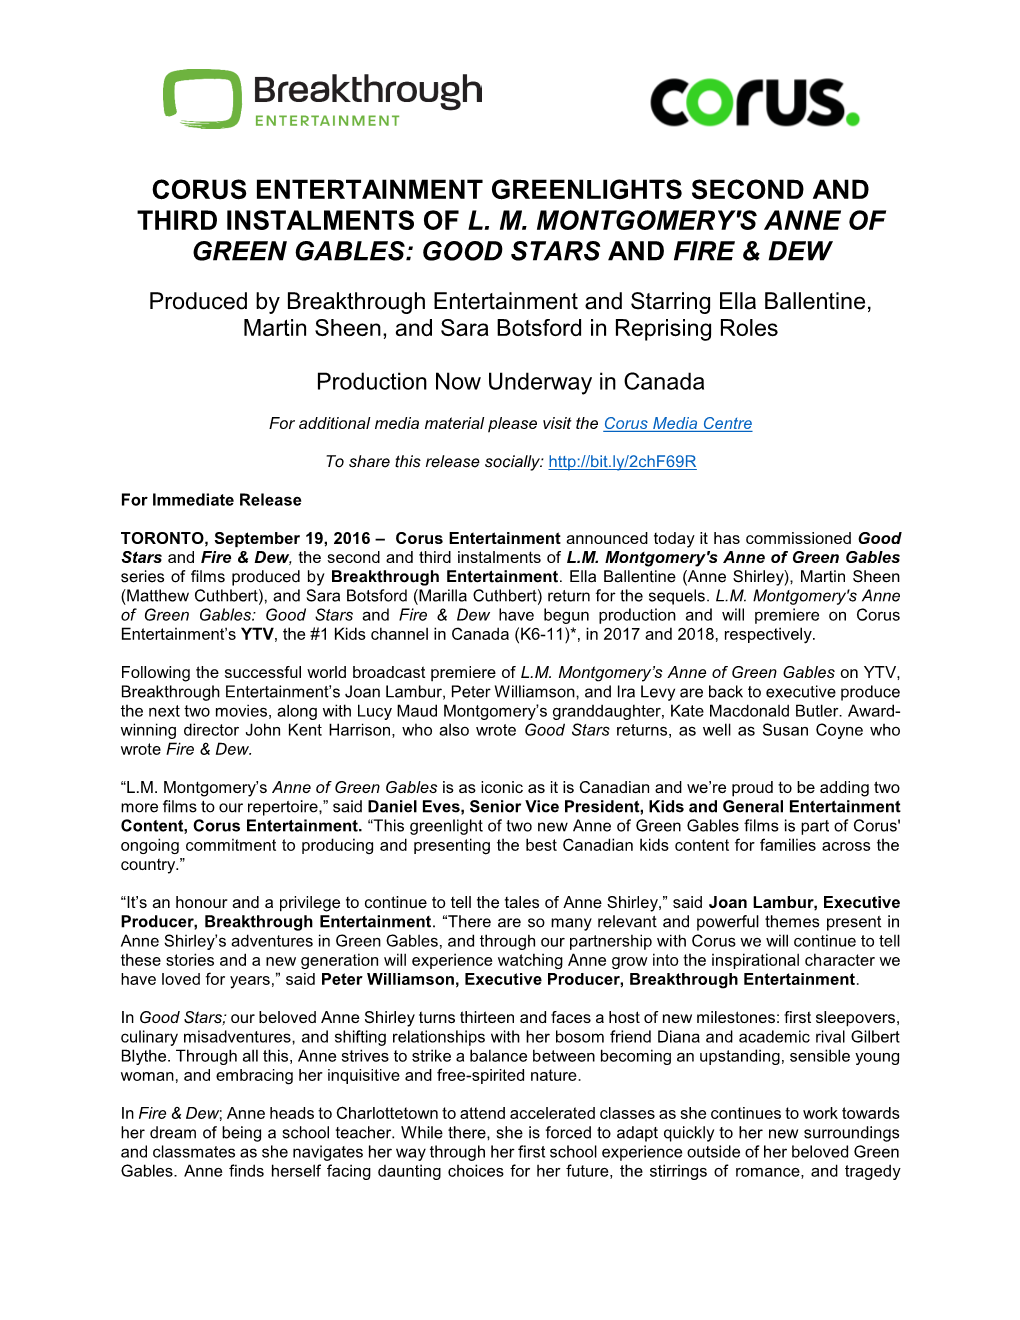 Corus Entertainment Greenlights Second and Third Instalments of L